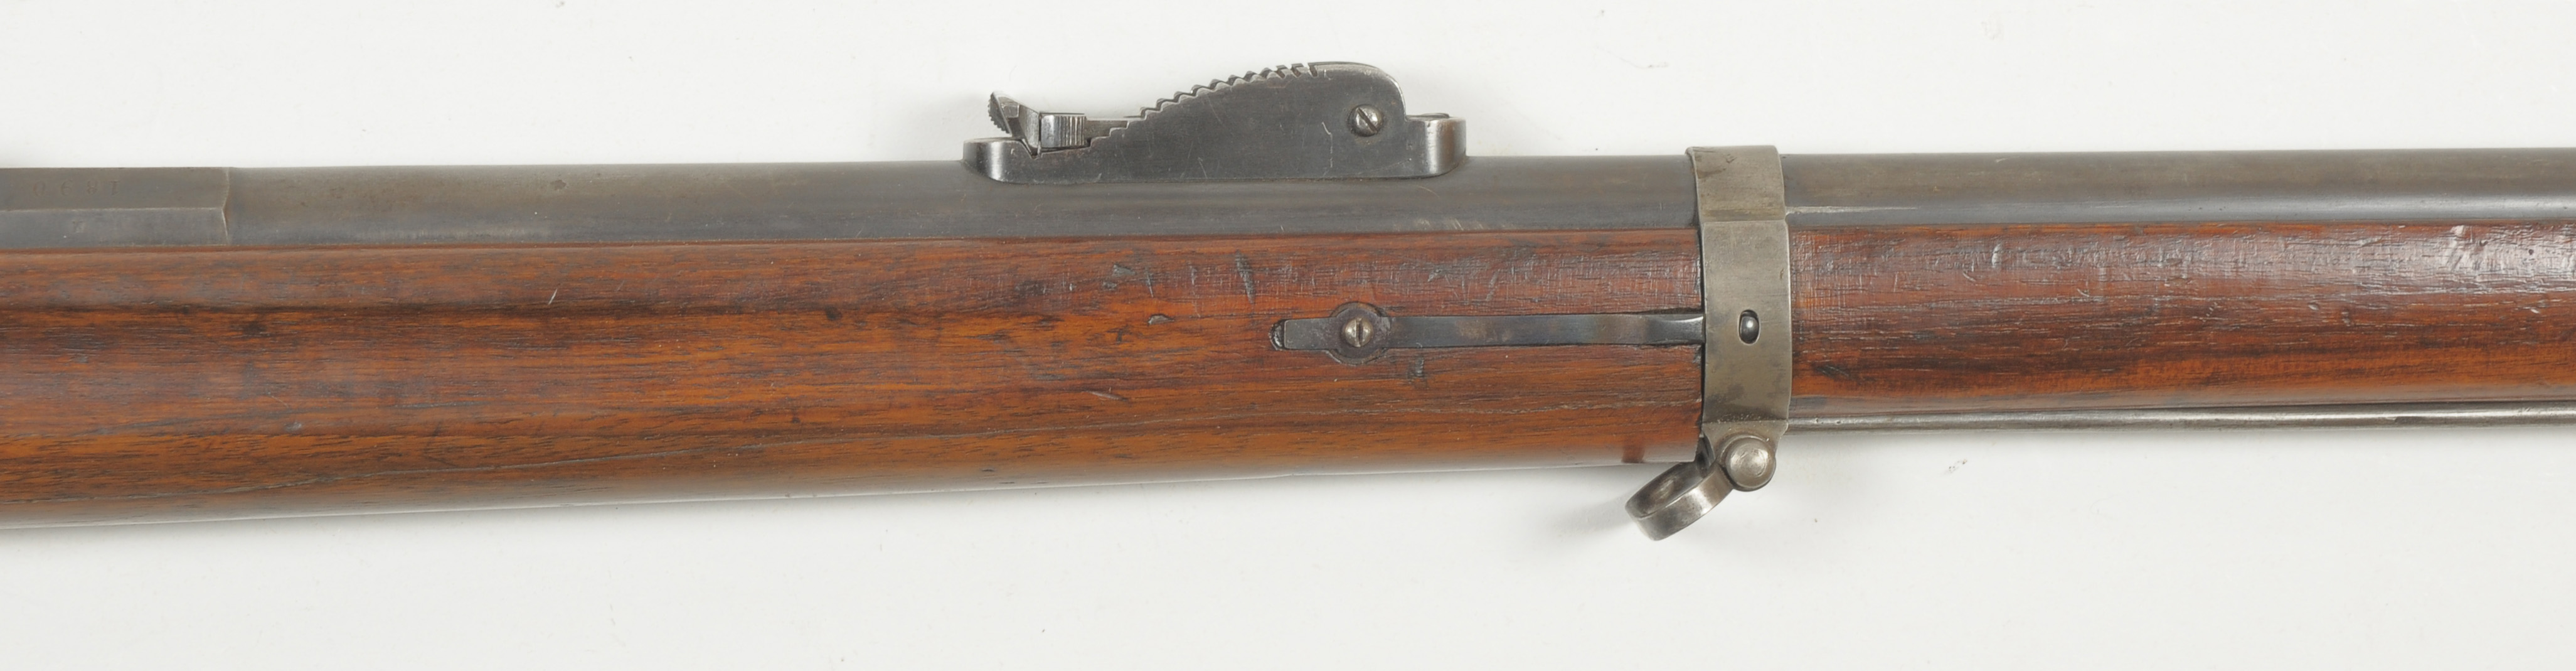 ./guns/rifle/bilder/Rifle-Kongsberg-Jarmann-M1887-15350-5.jpg